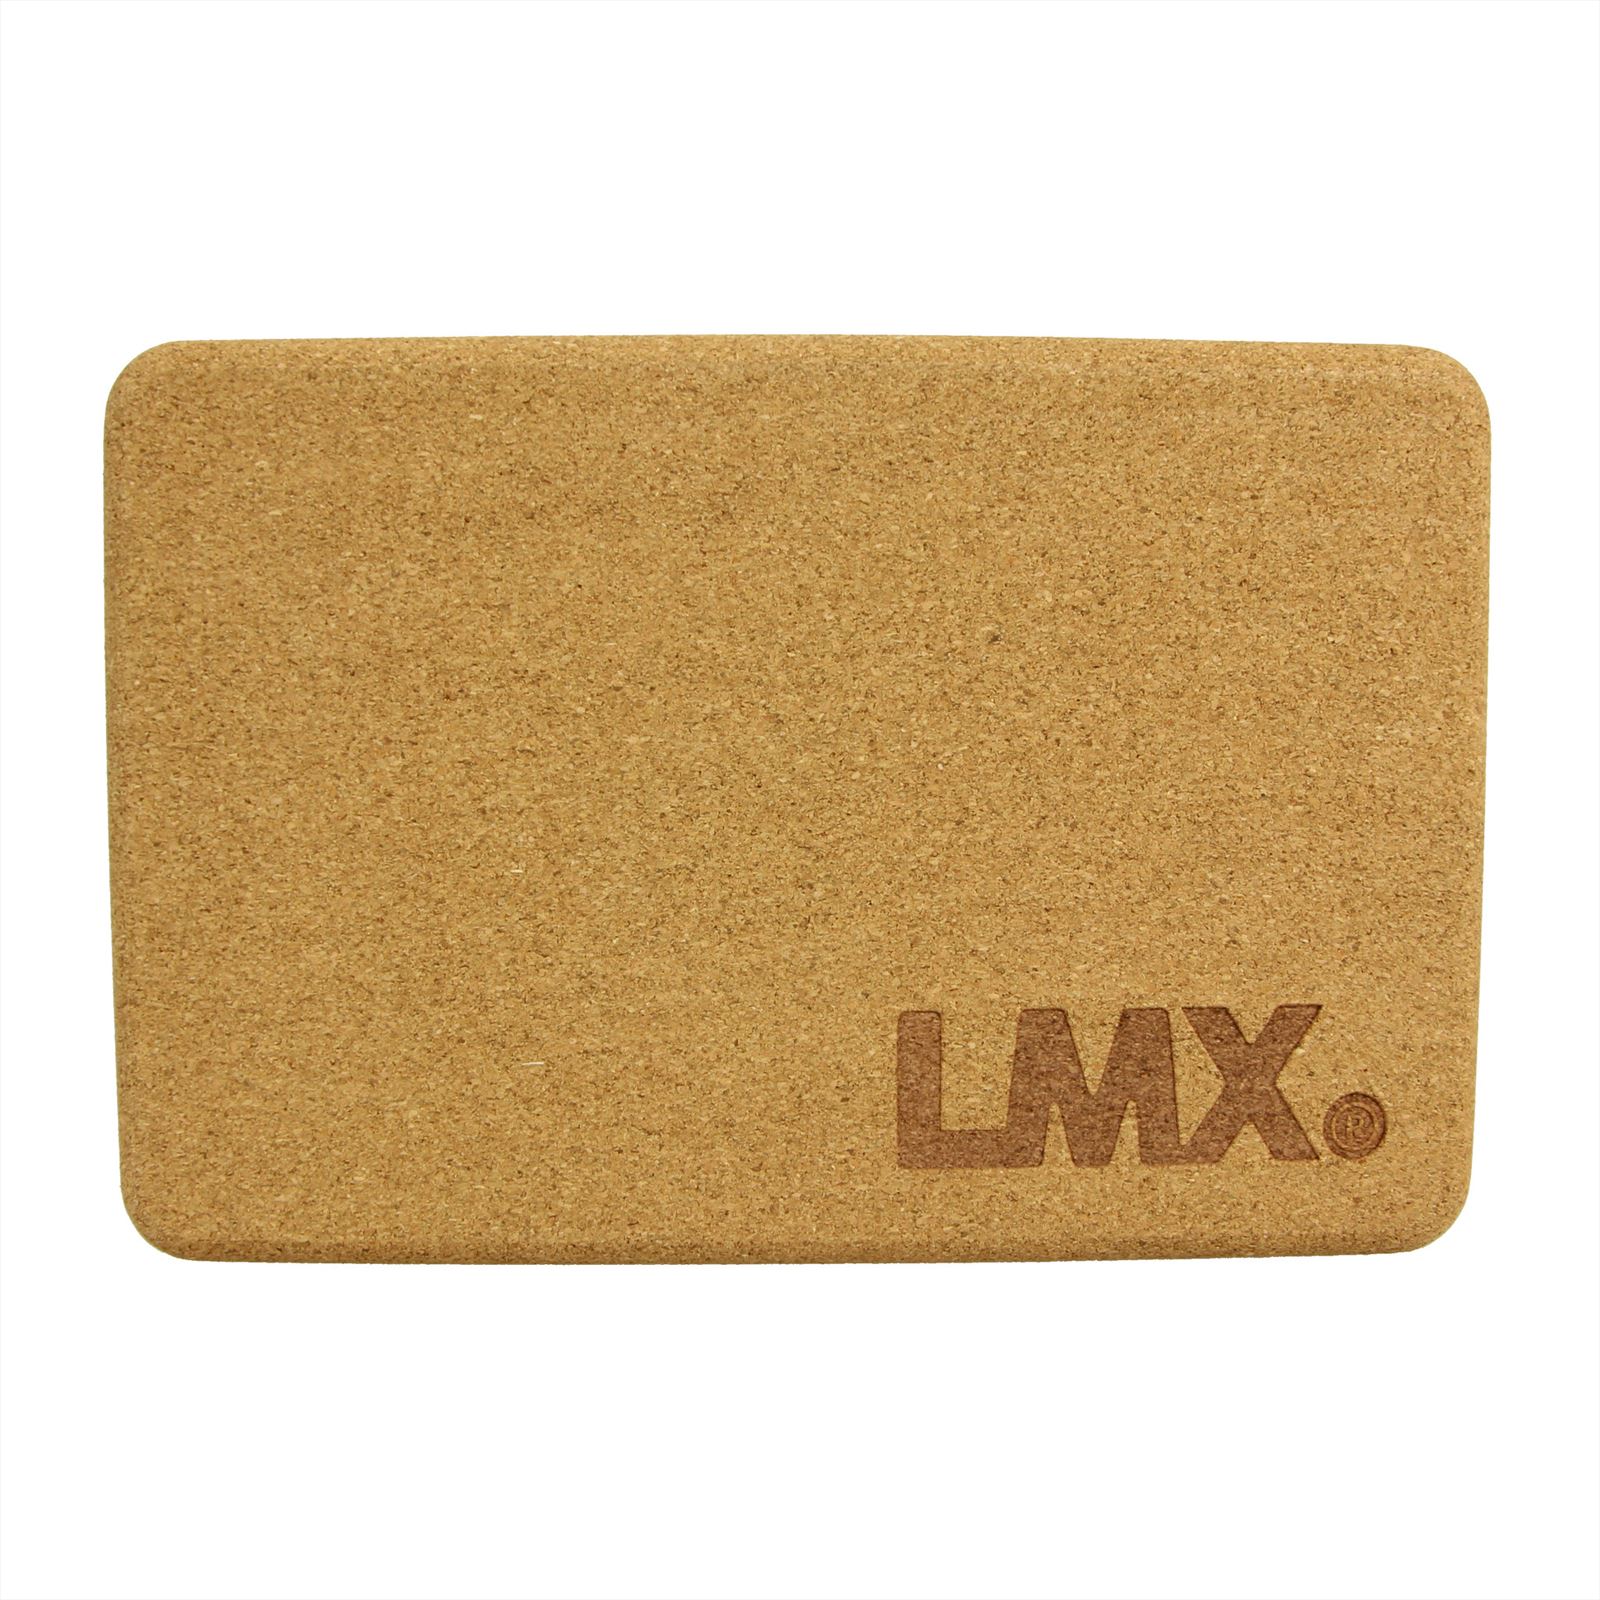 Lifemaxx LMX Yoga Blok Kurk - Bruin